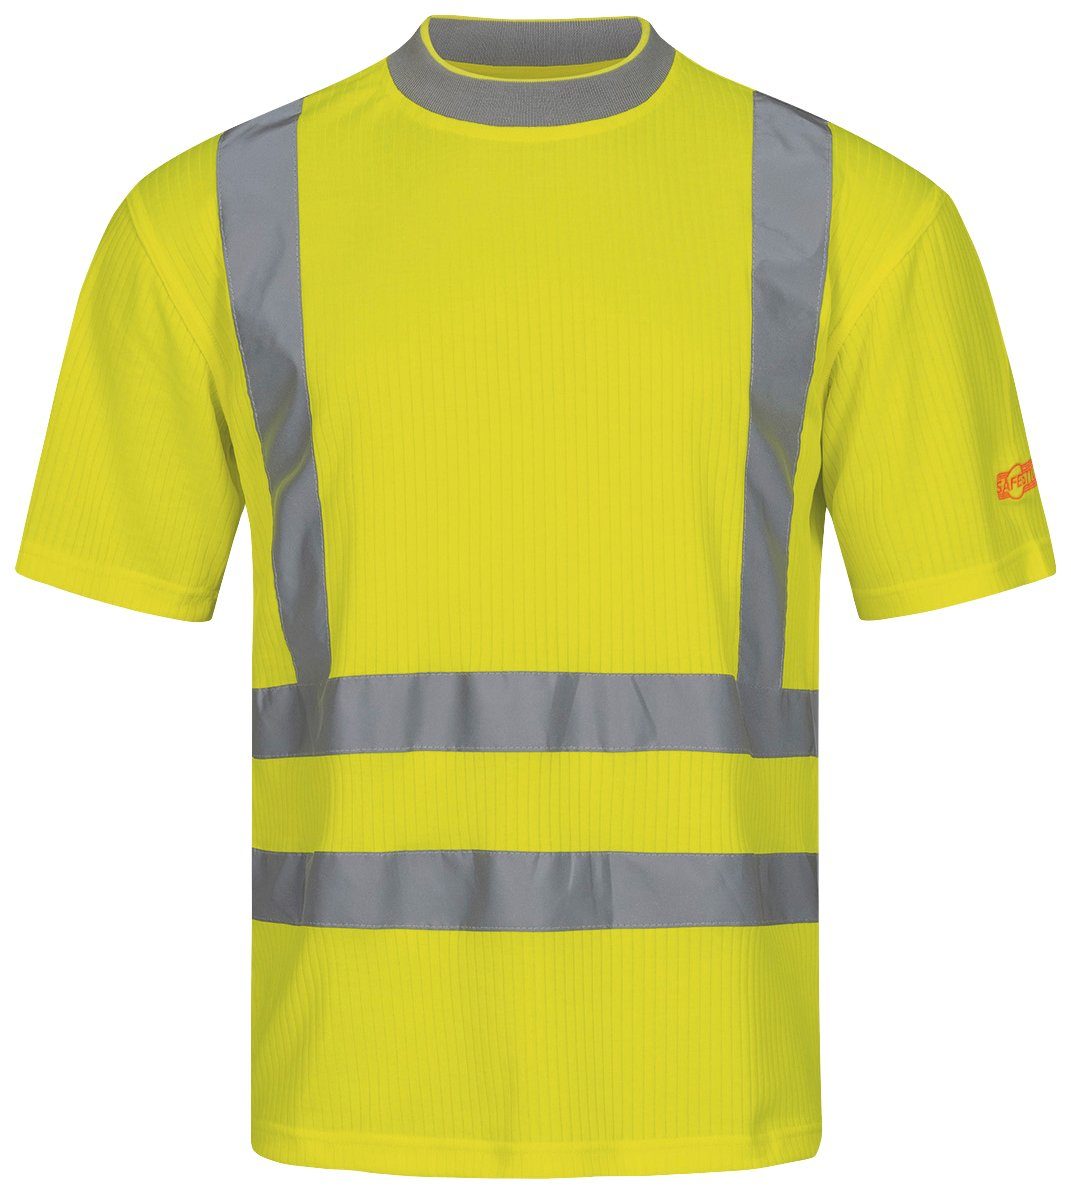 Safestyle Warnschutz-Shirt Steven gelb, Norm: EN 471 Klasse 2